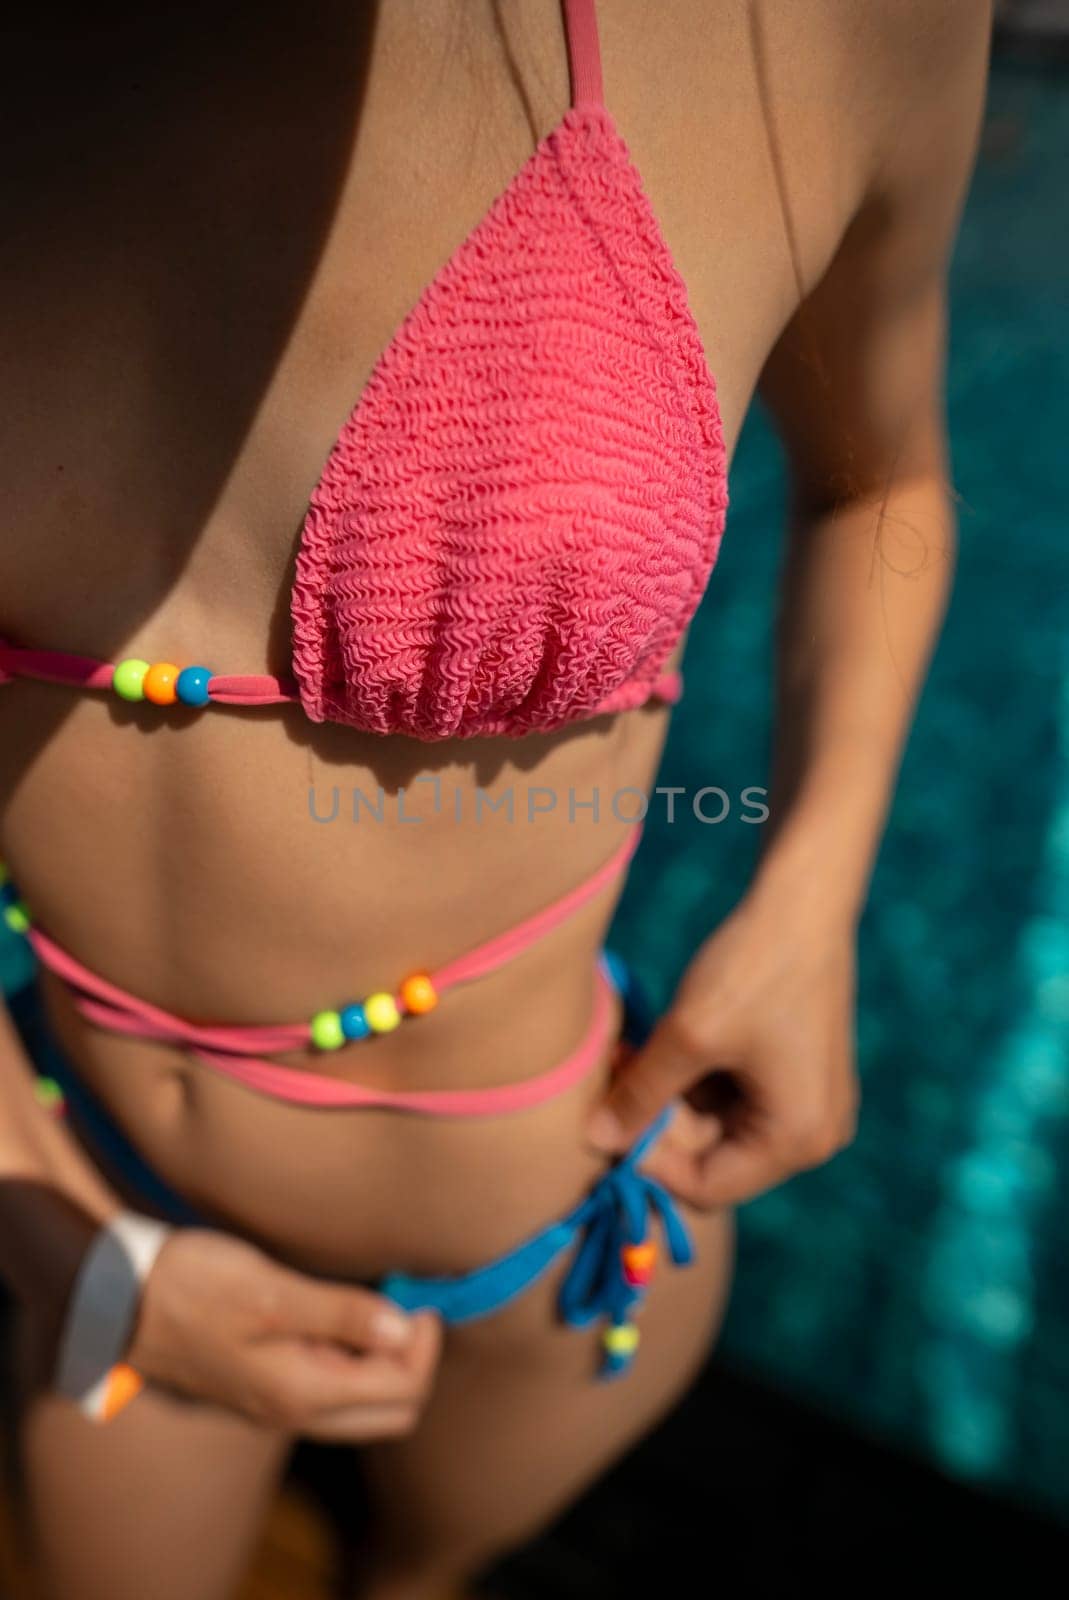 A spirited and sporty lady soaks up the sun's rays in her bikini near the pool. by teksomolika